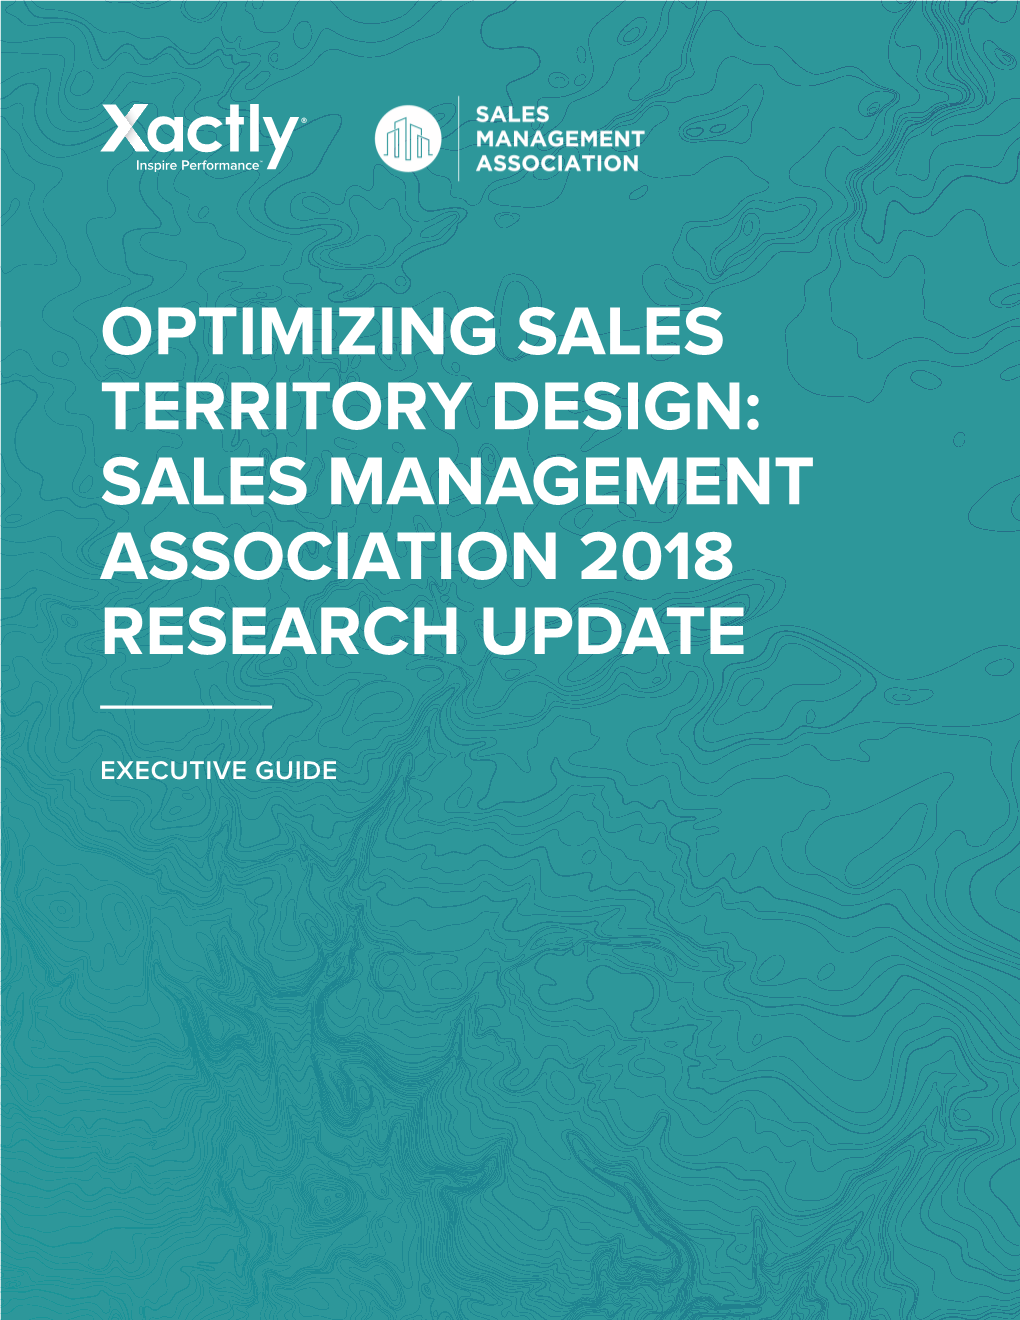 Sales Management Association 2018 Research Update